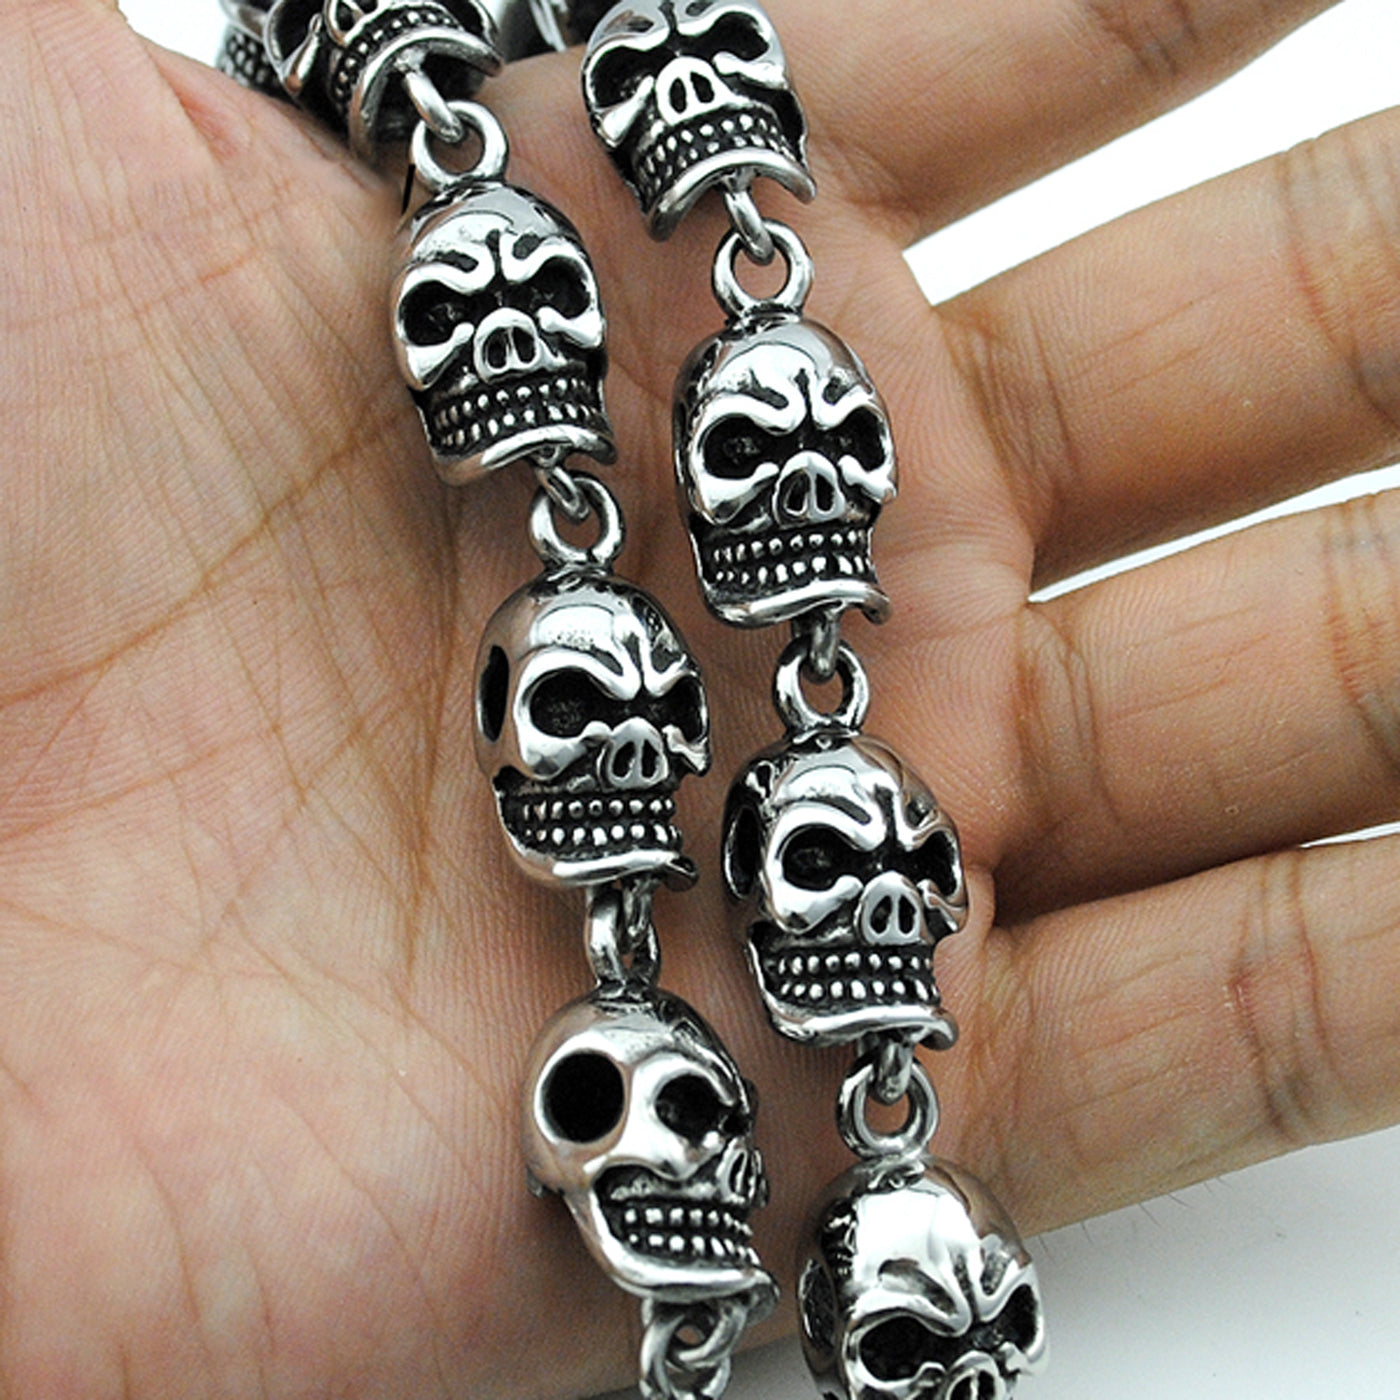 Skull Necklace for Men